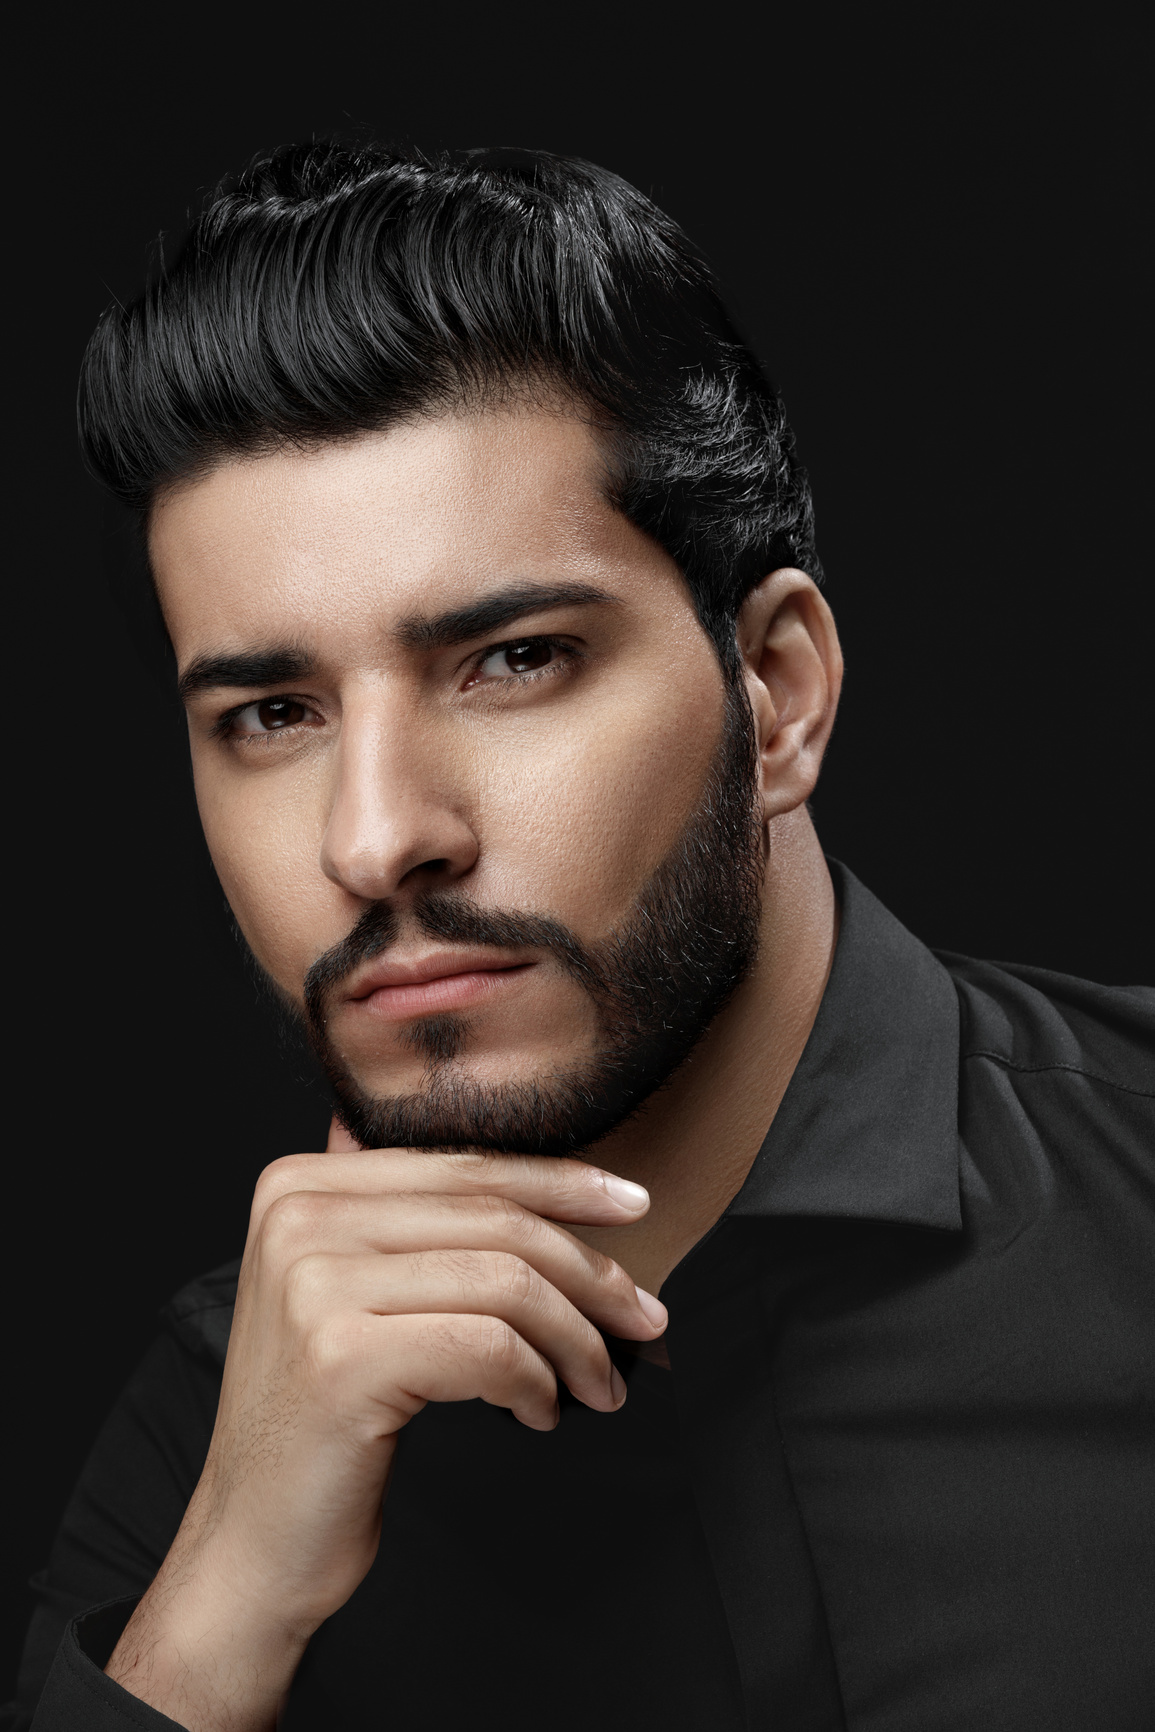 Men Haircut. Man With Hair Style, Beard And Beauty Face Portrait